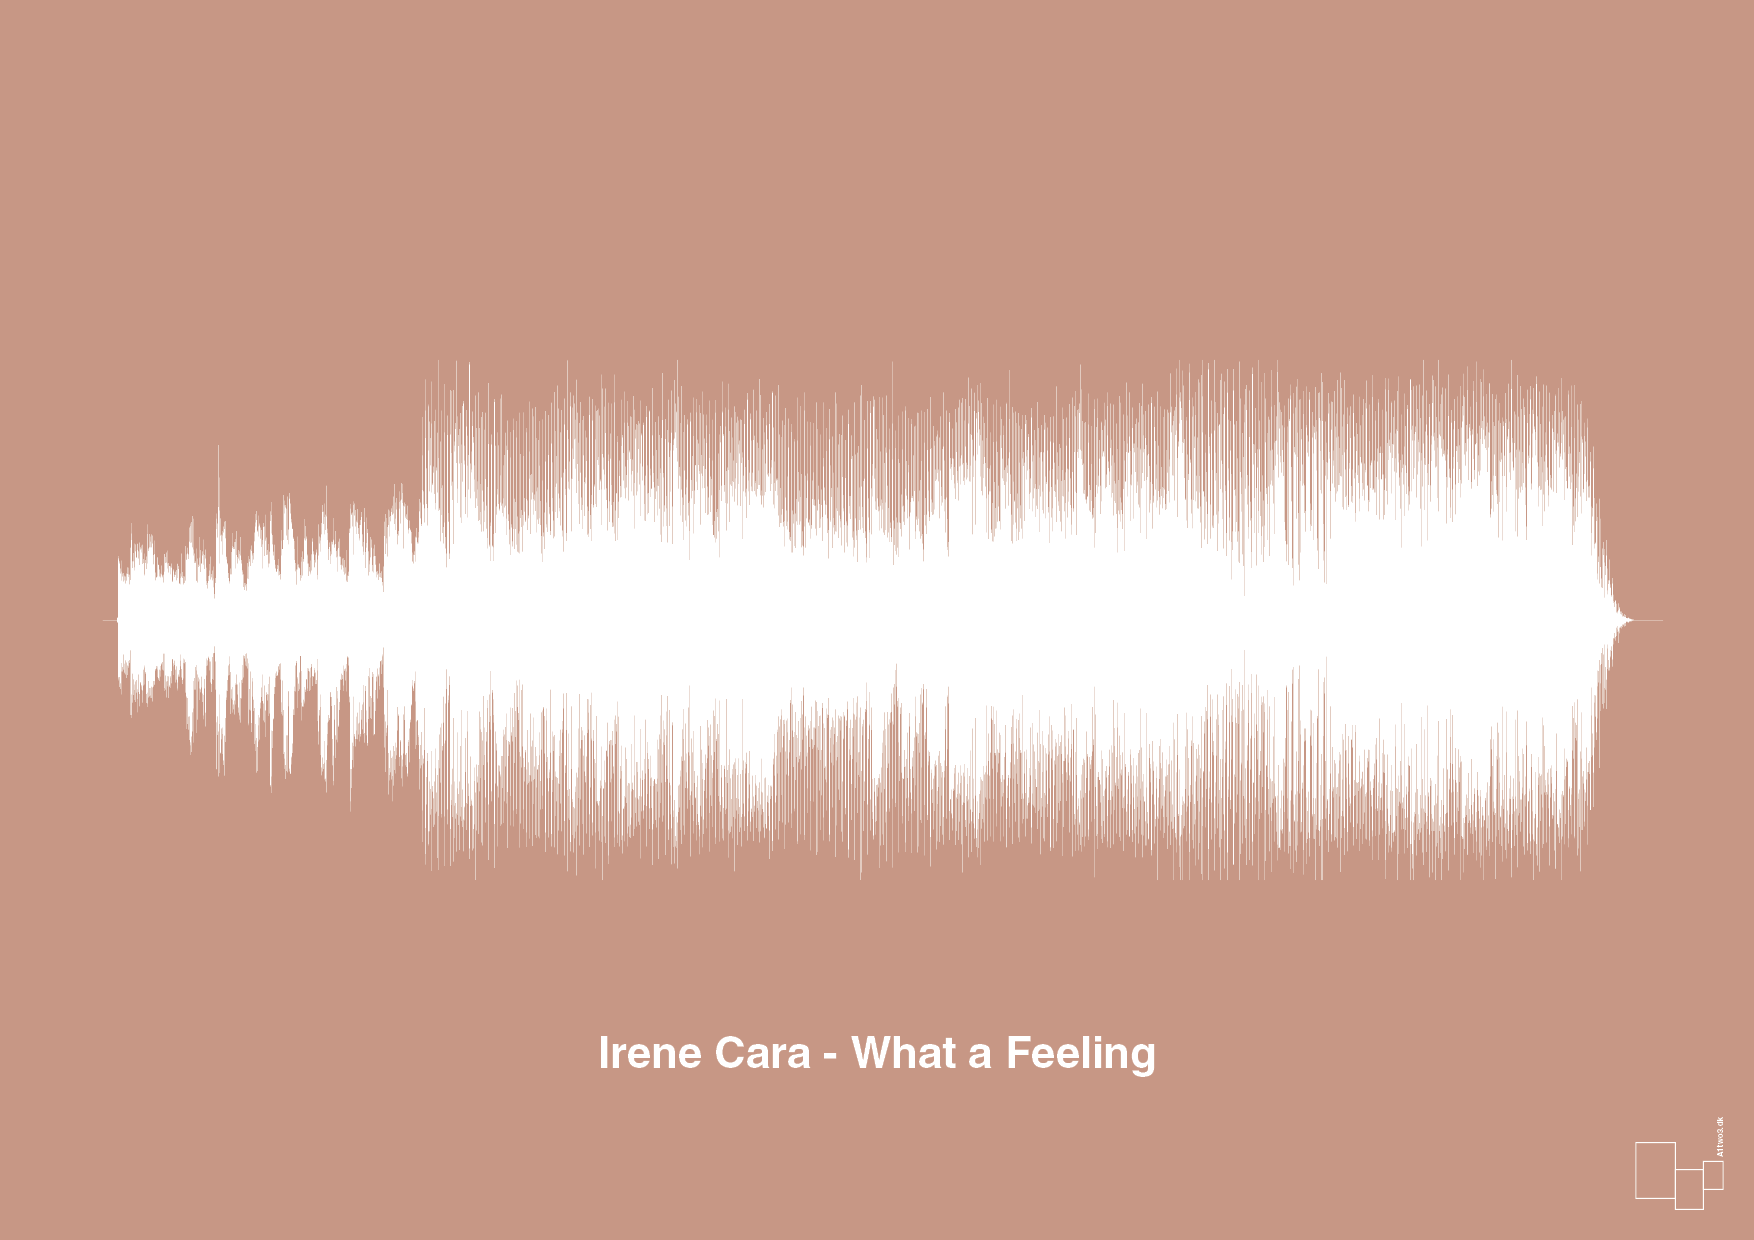 irene cara - what a feeling - Plakat med Musik i Powder